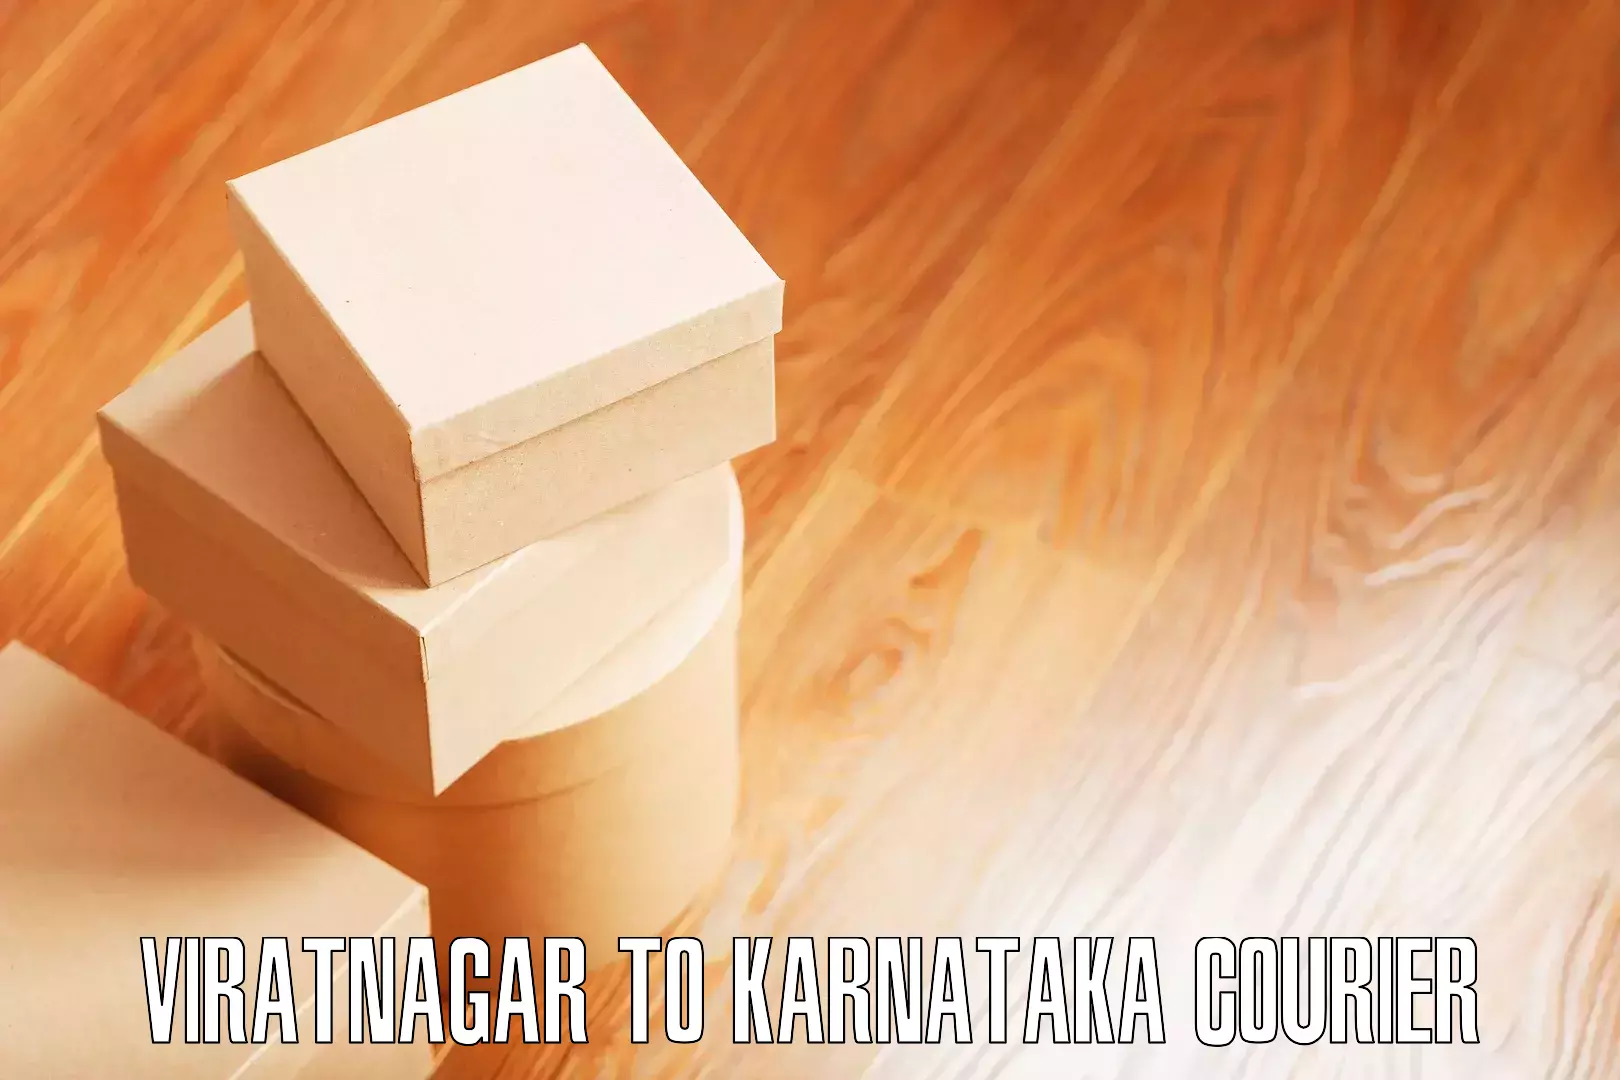 Efficient moving company Viratnagar to Nelamangala